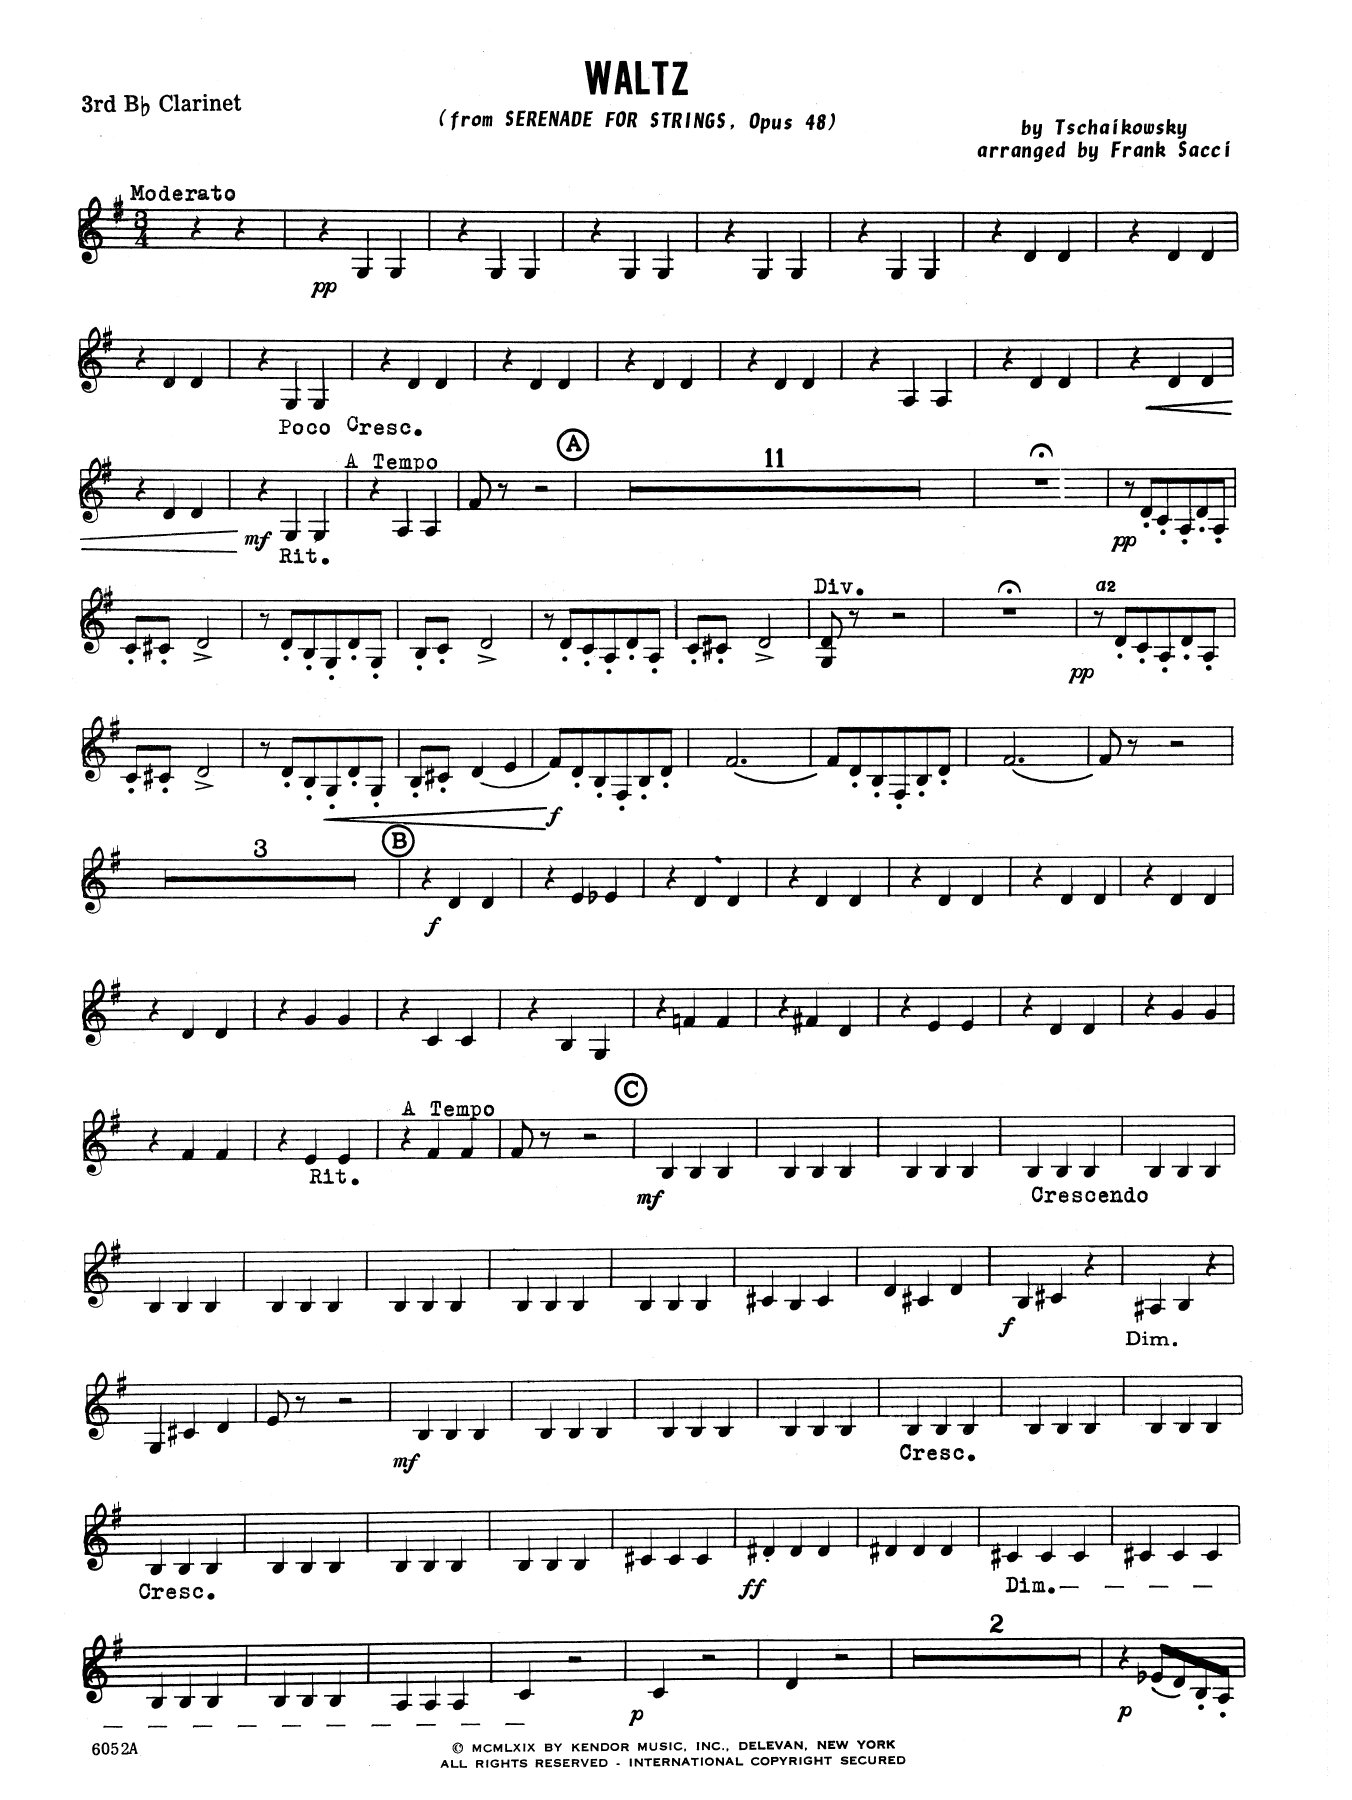 Waltz From Serenade For Strings Op. 48 - 3rd Bb Clarinet (Woodwind Ensemble) von Frank Sacci